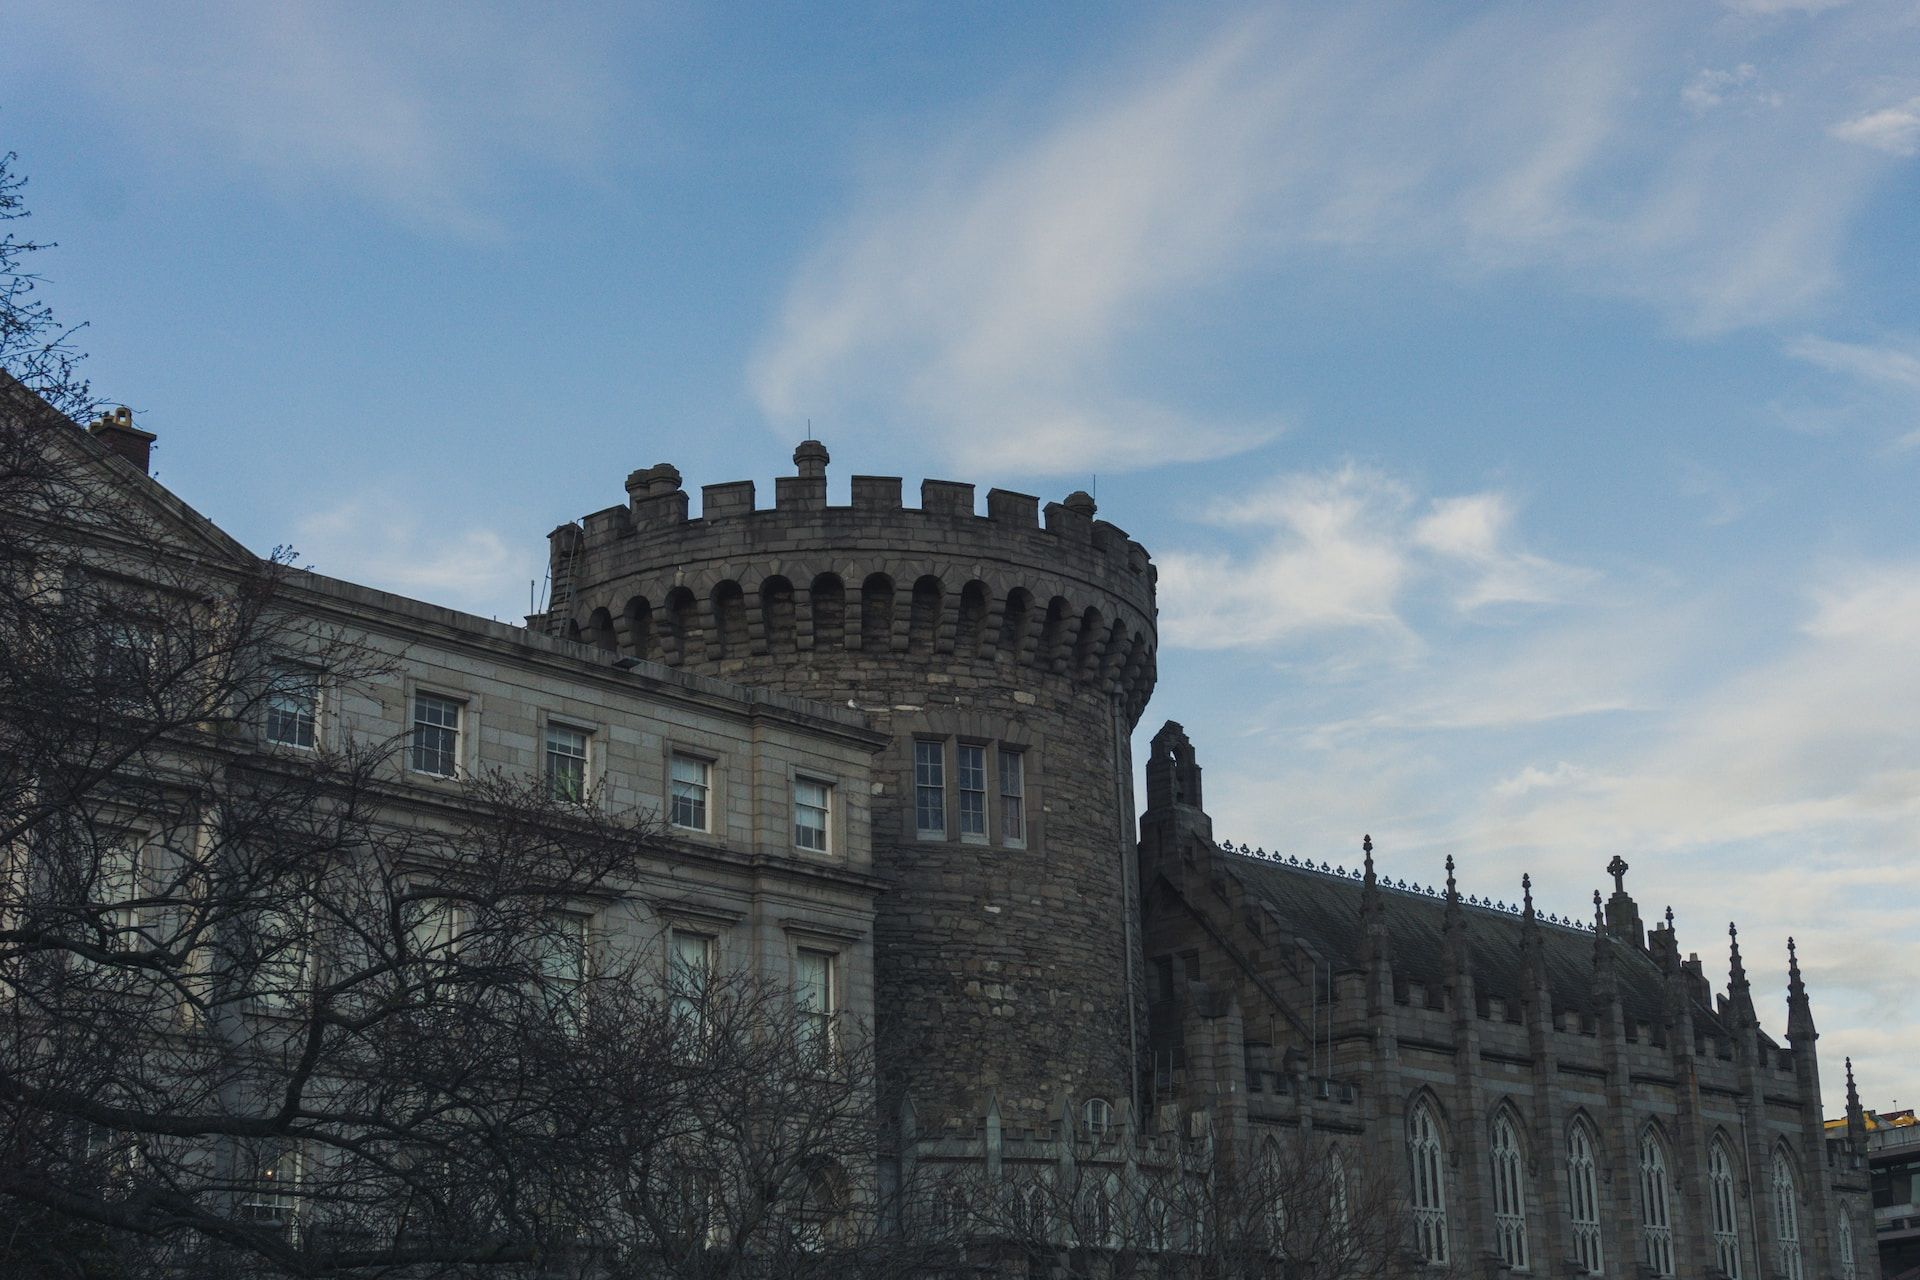 The Dublin Castle in Ireland